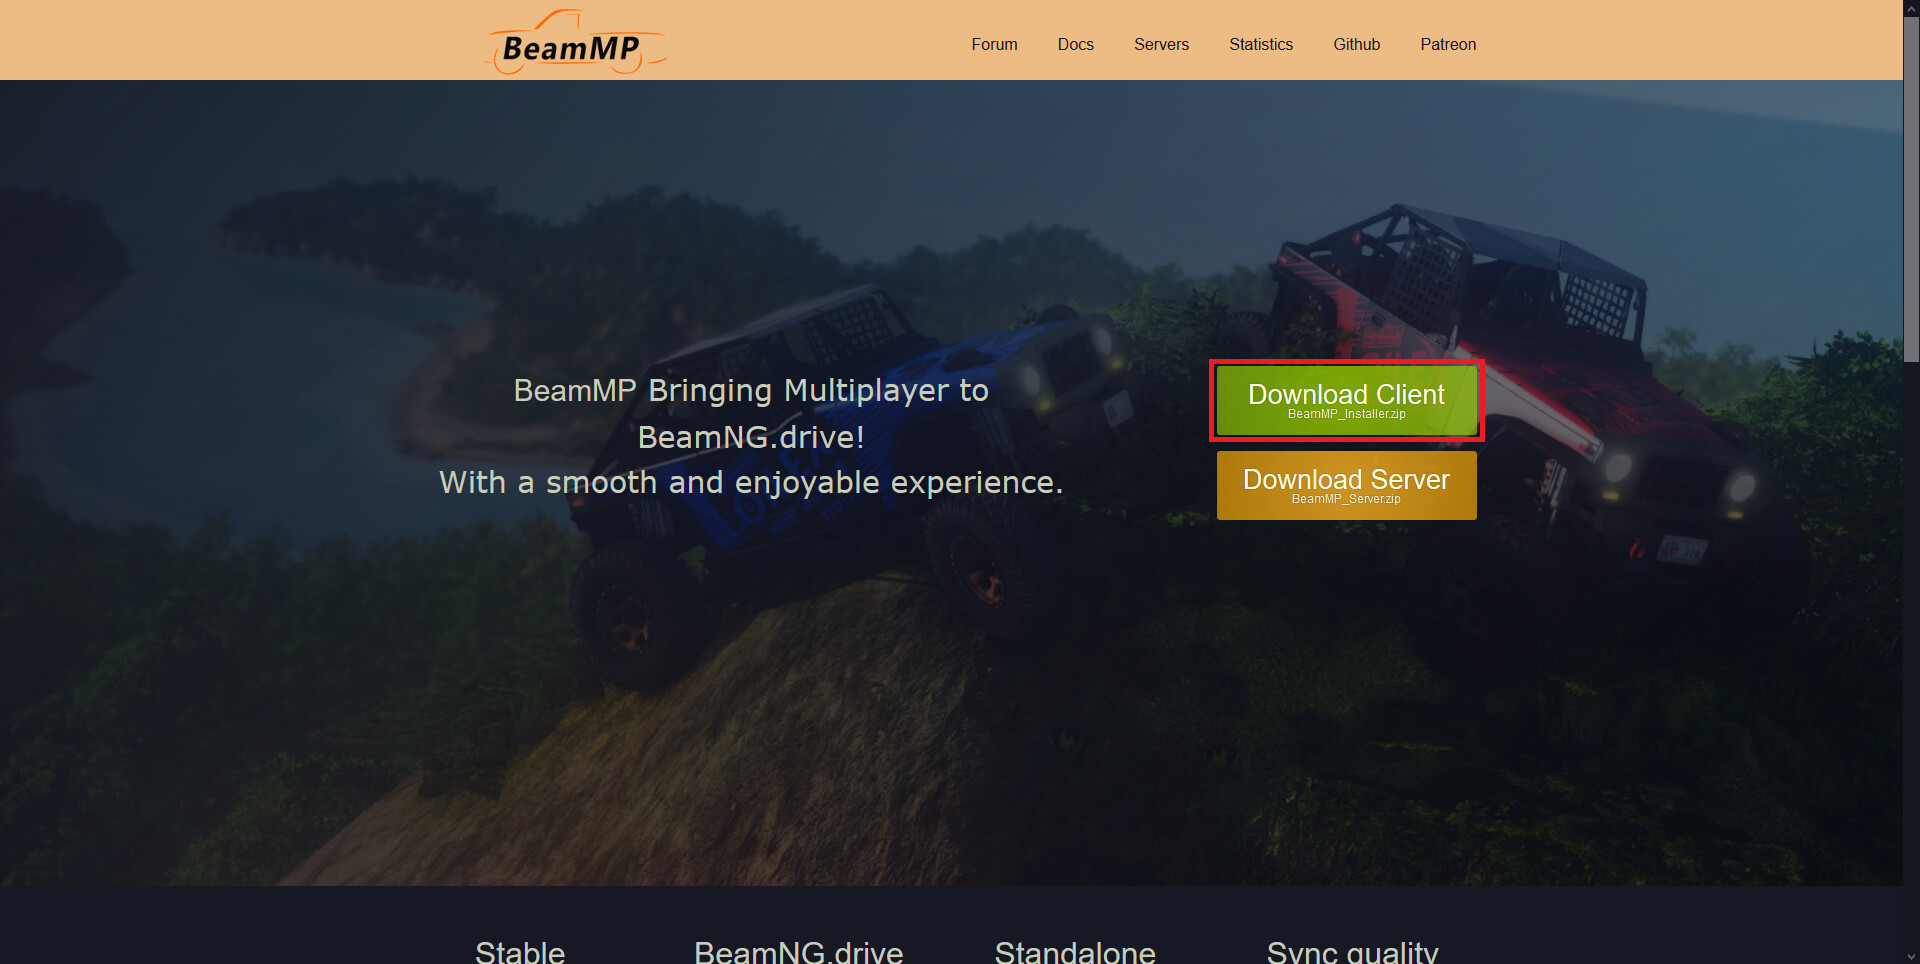 Beammp forum. Beammp сервер. Beammp как создать сервер. Forum beammp. Beammp приватный сервер.